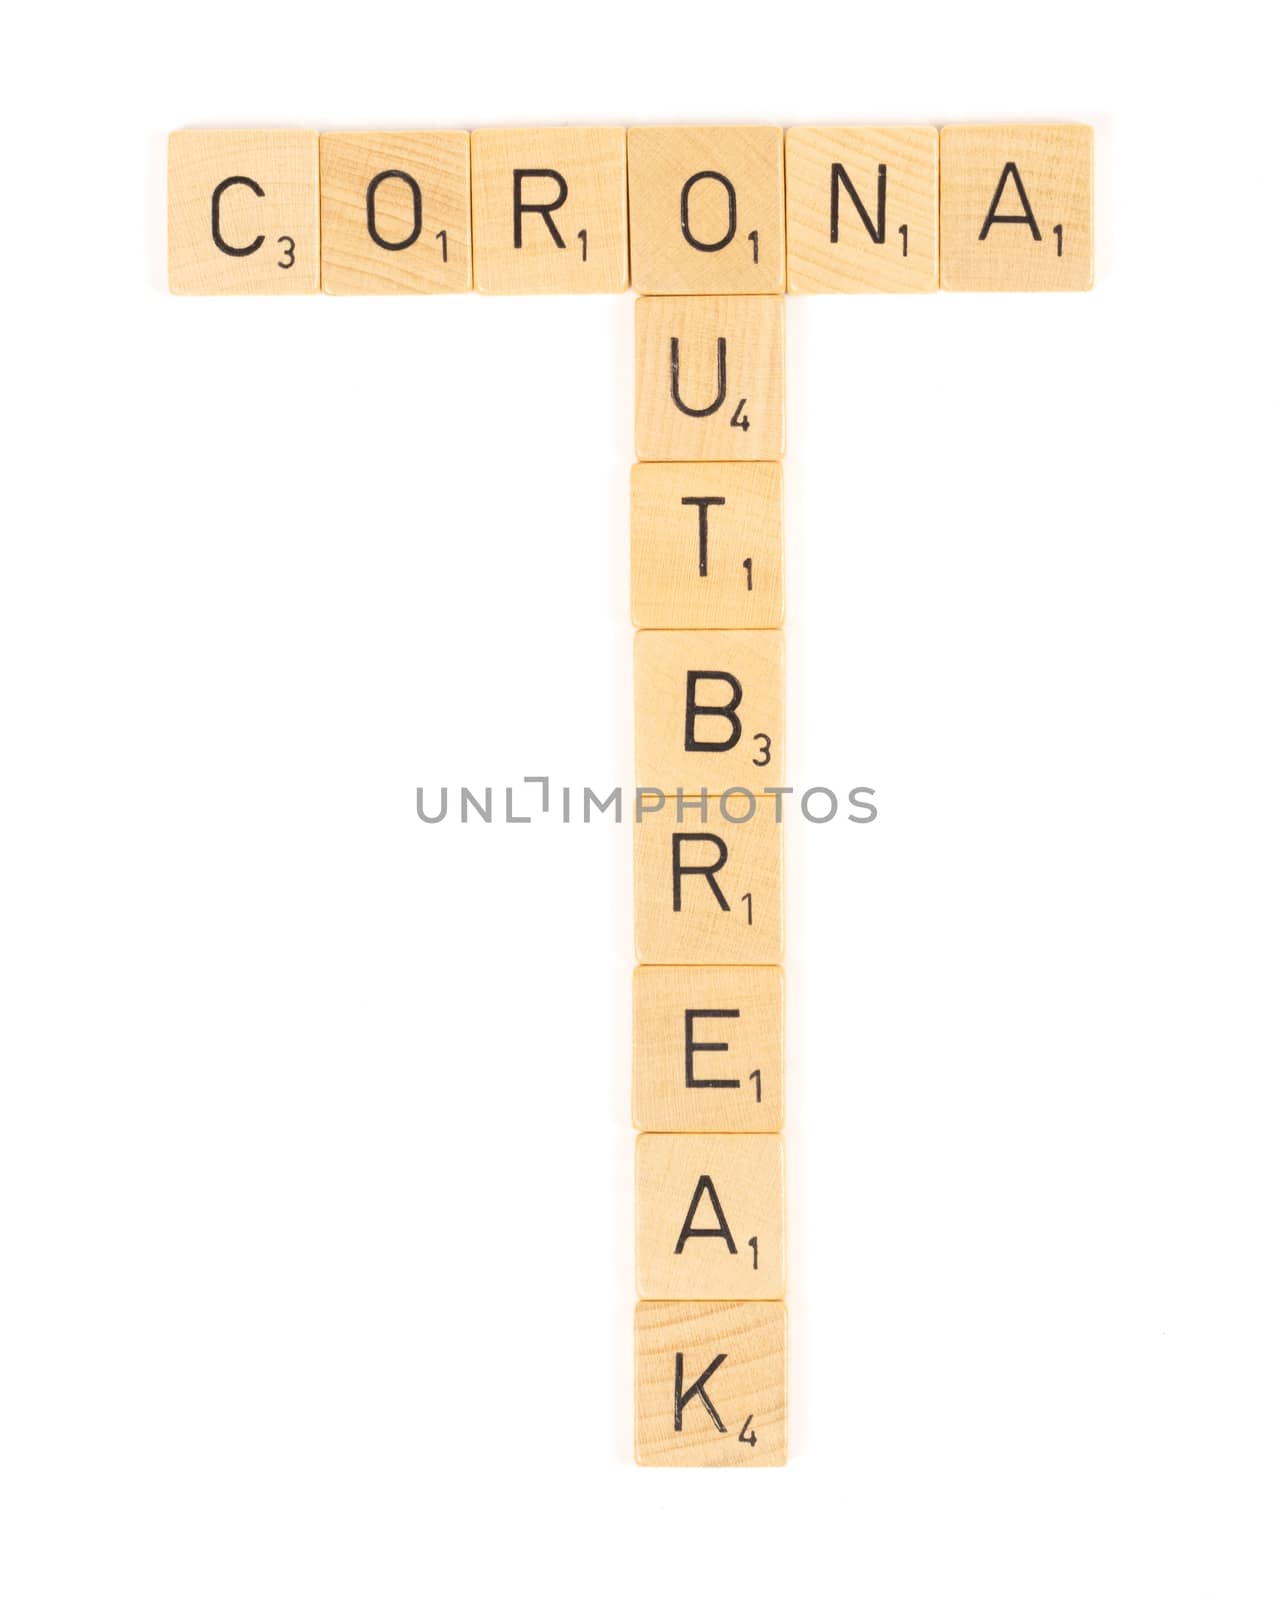 Corona outbreak scrable letters by michaklootwijk